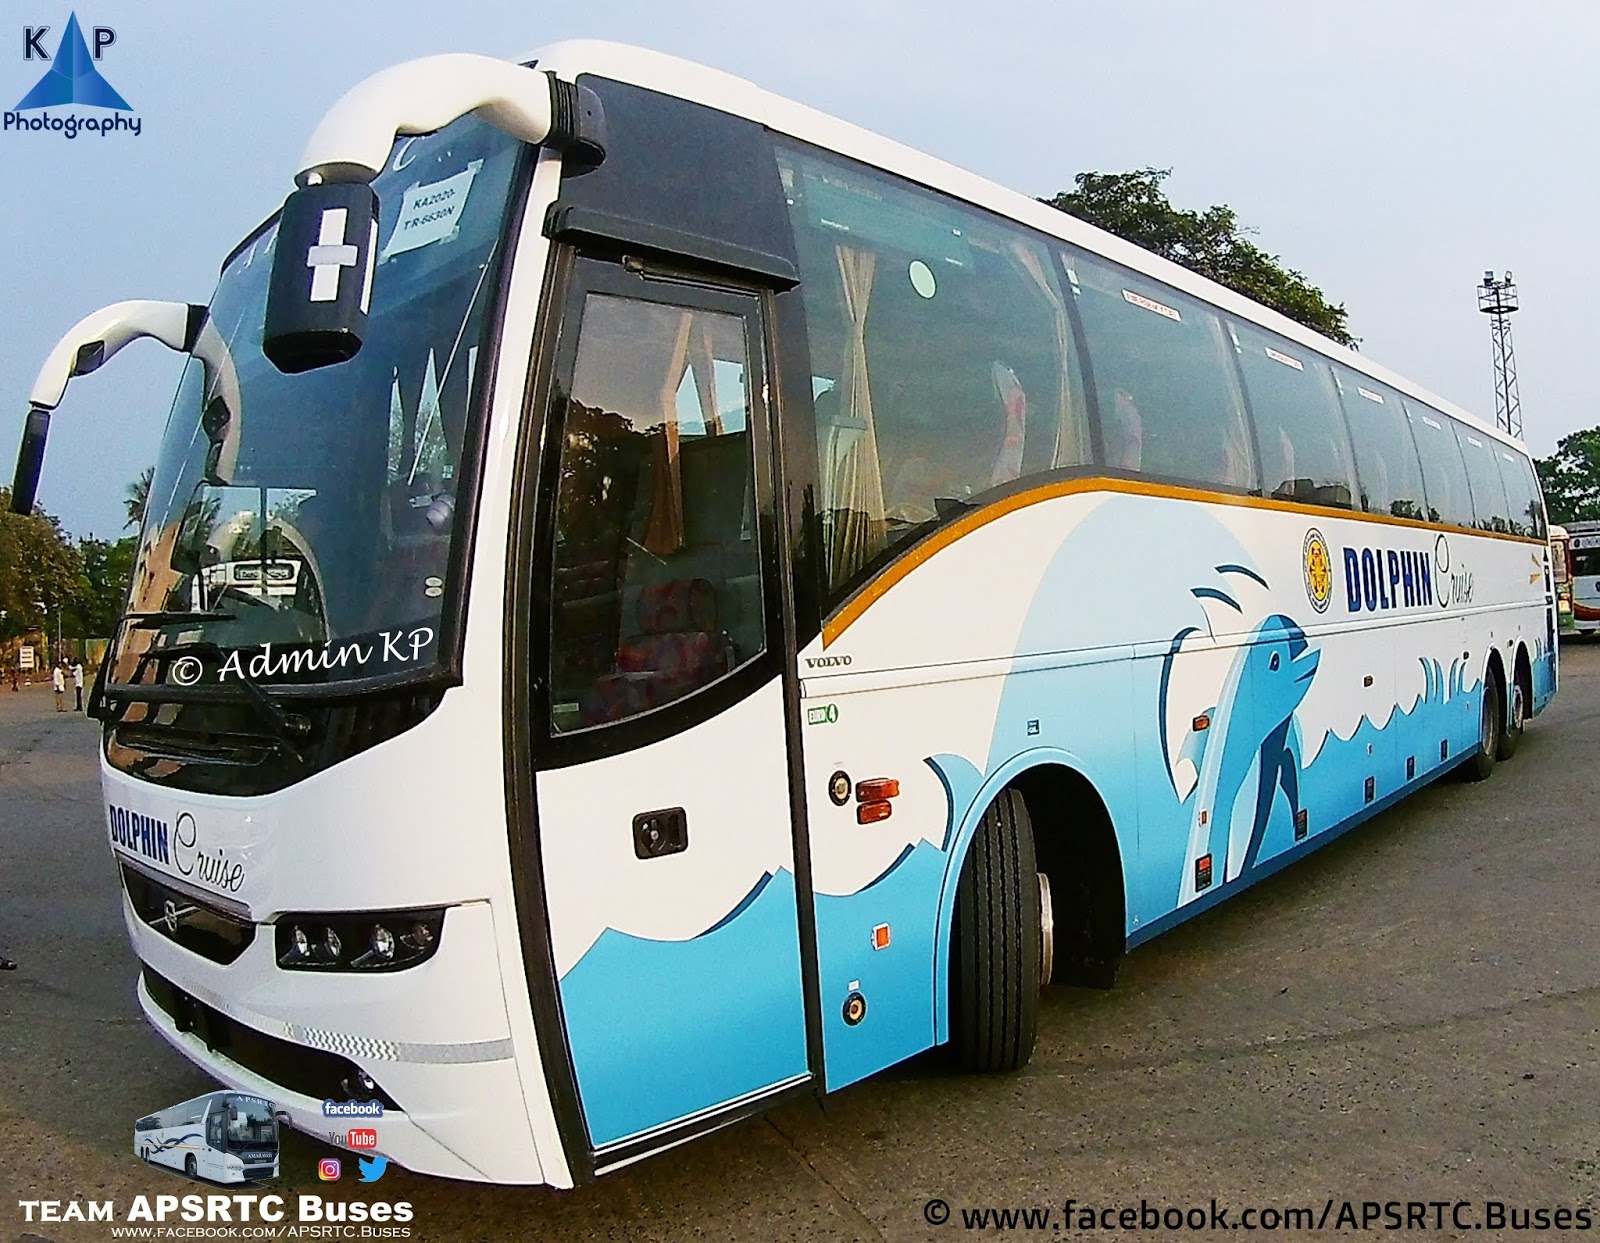 dolphin cruise bus seats